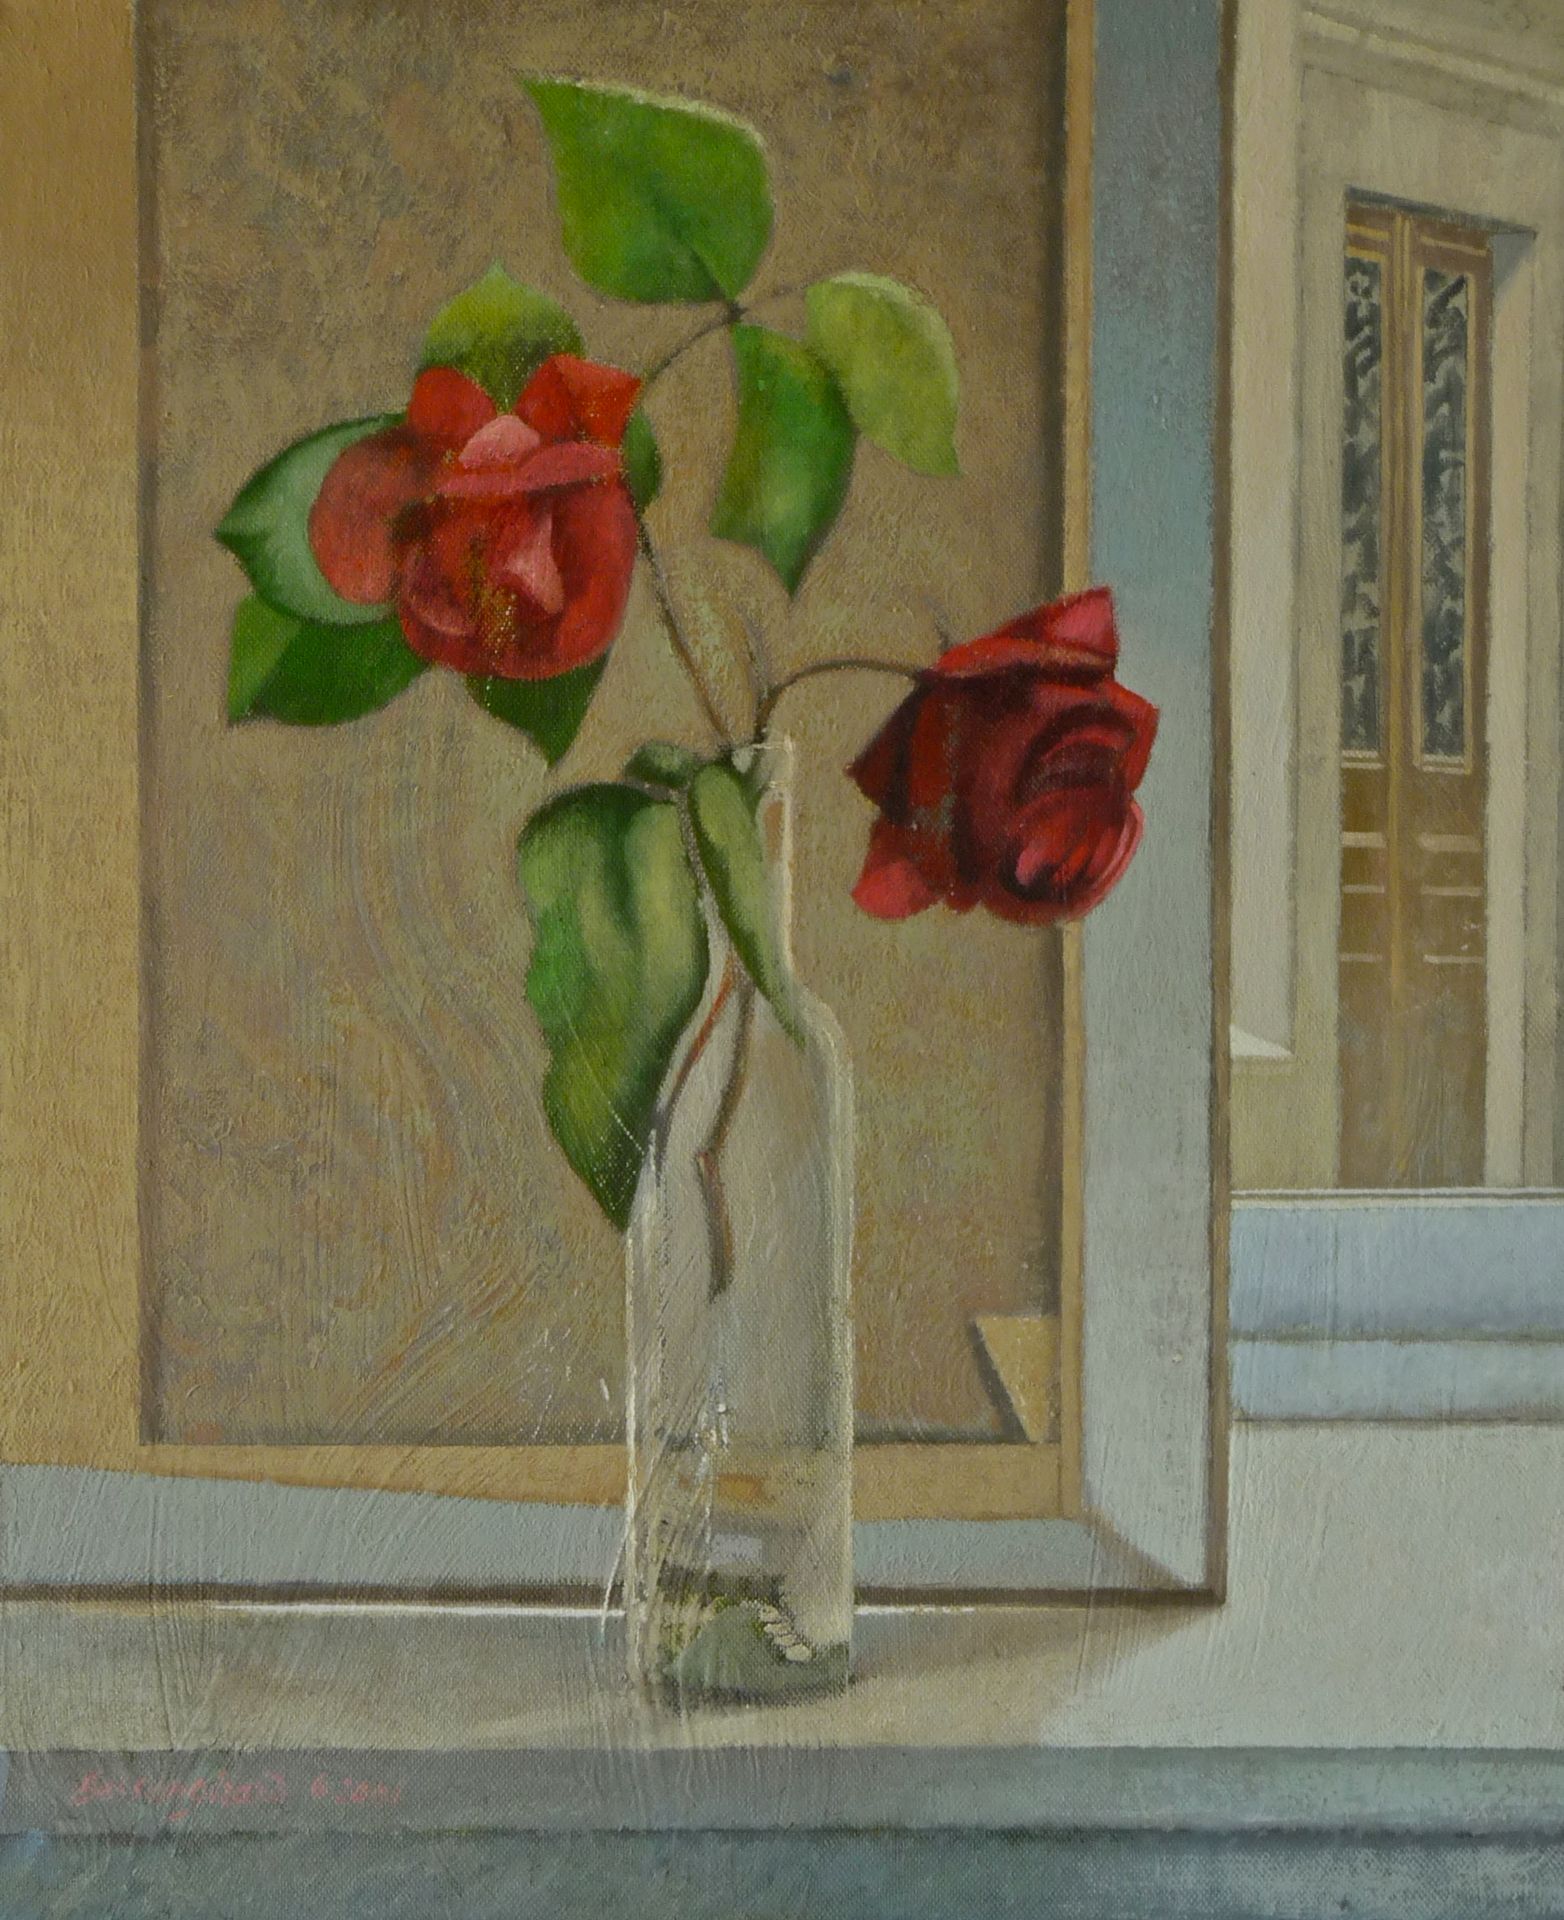 Null 让-克劳德-贝松-吉拉尔 (1938-2021)

无题37》，2001年

布面油画，左下方有签名和日期6/2001

46,5 x 38 cm